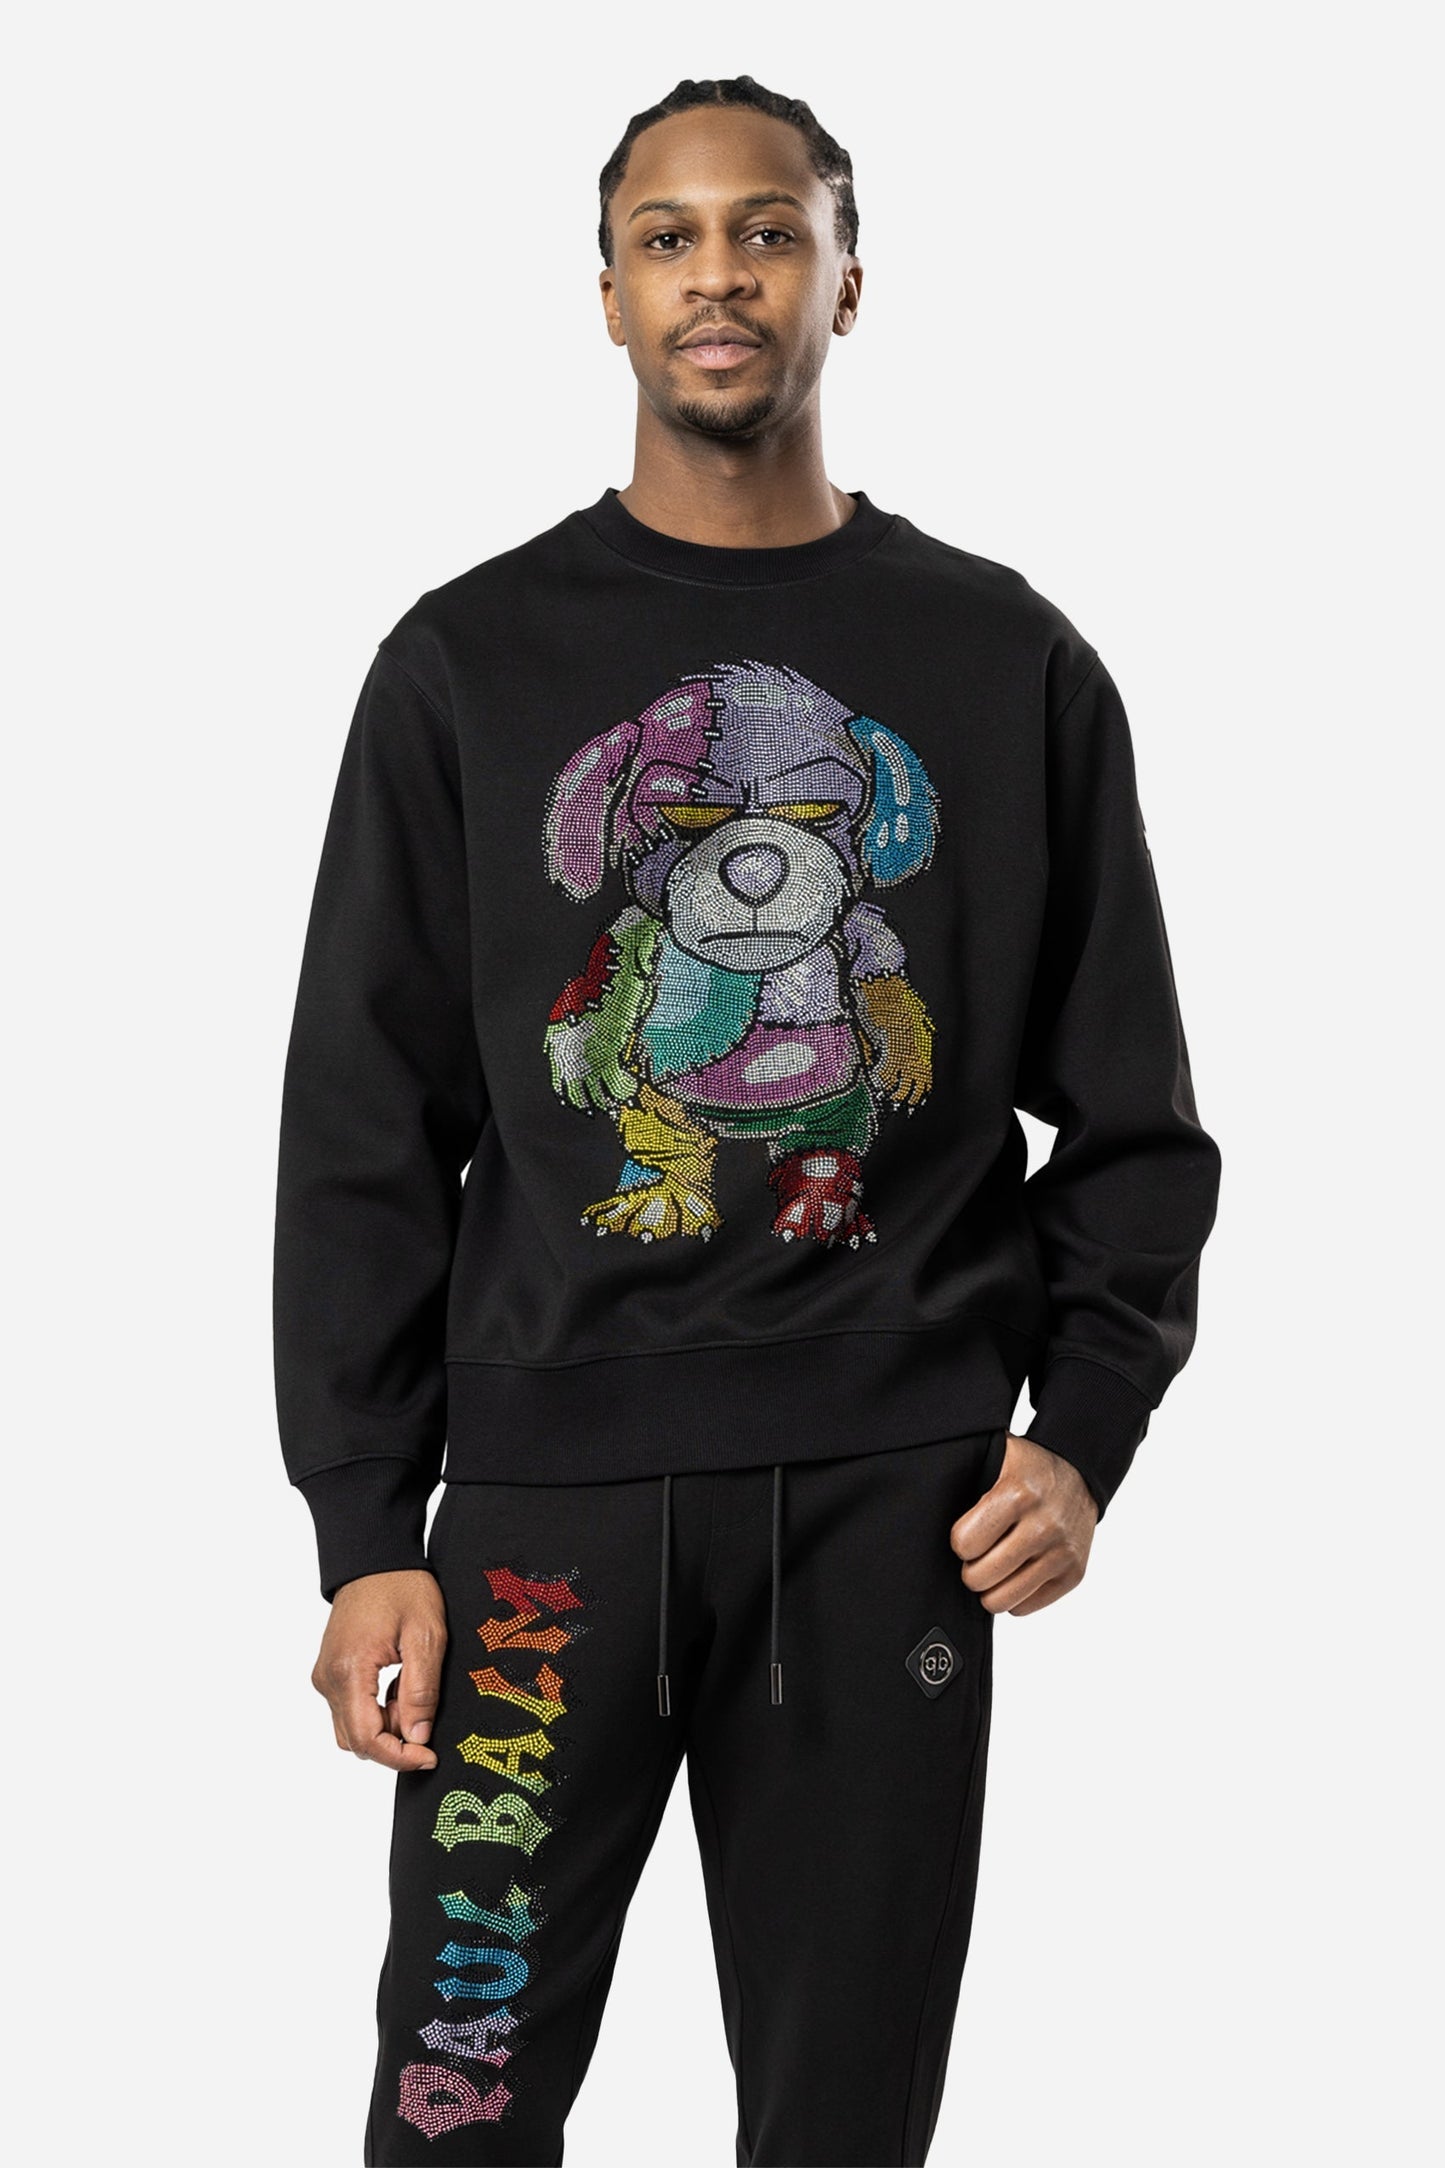 Rainbow Teddy Rhinestones Sweatshirt - Limited to 300